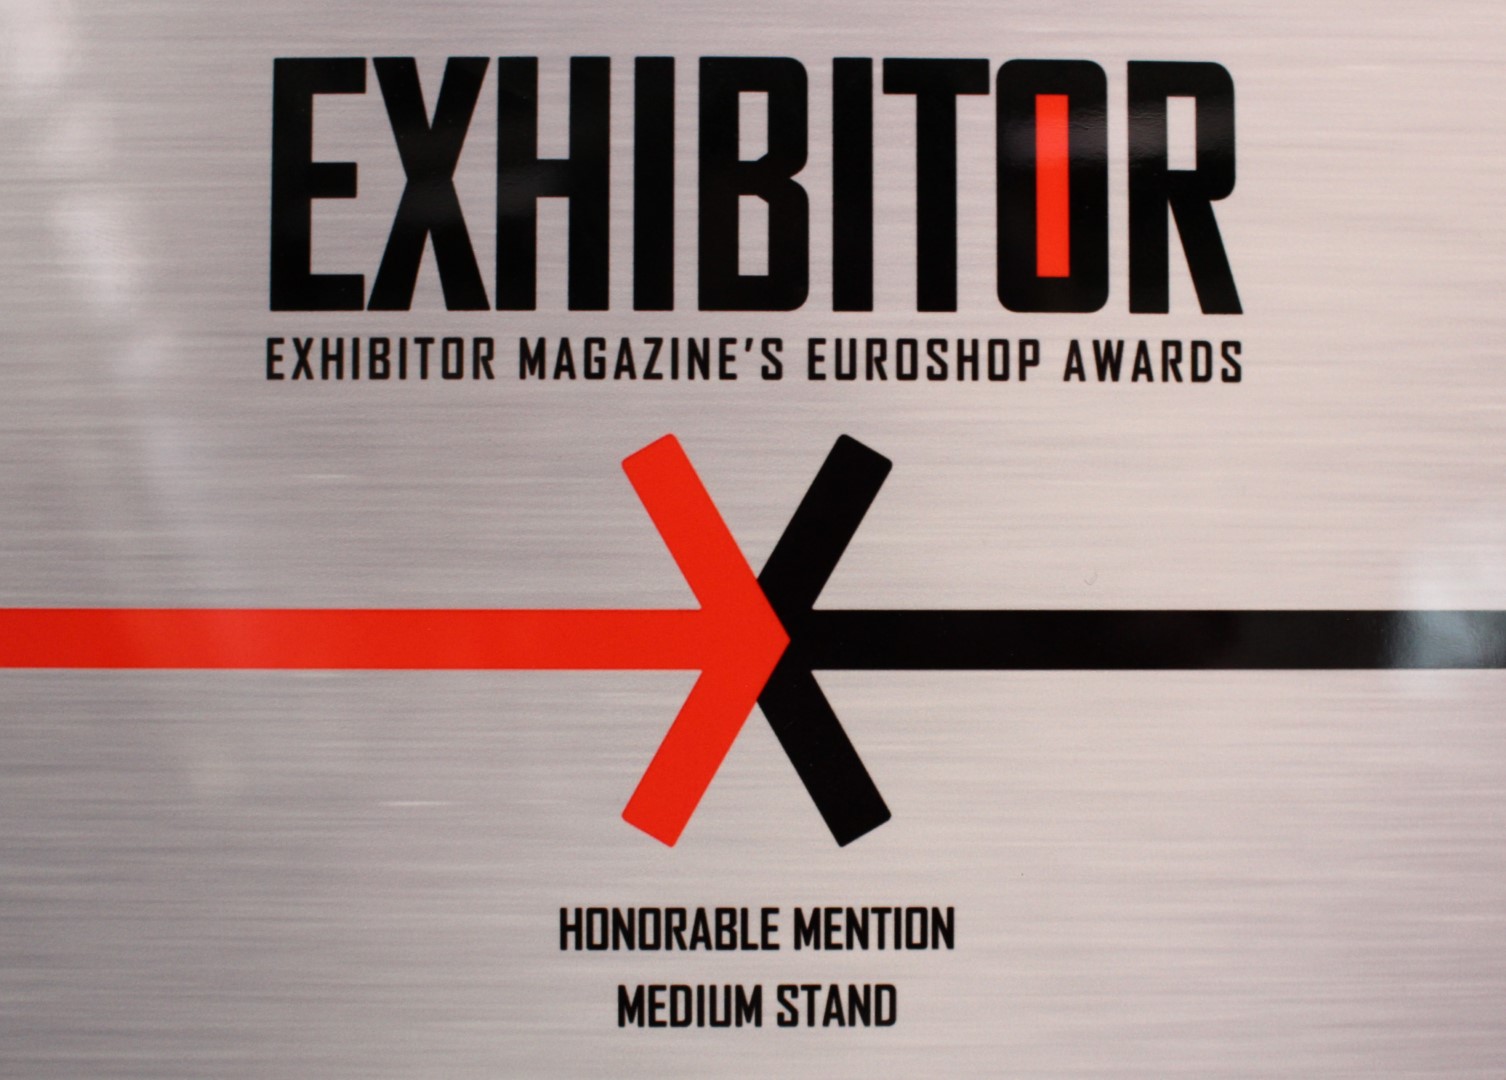 EXHIBITOR杂志的EUROSHOP（杜塞尔多夫零售业展览会）奖